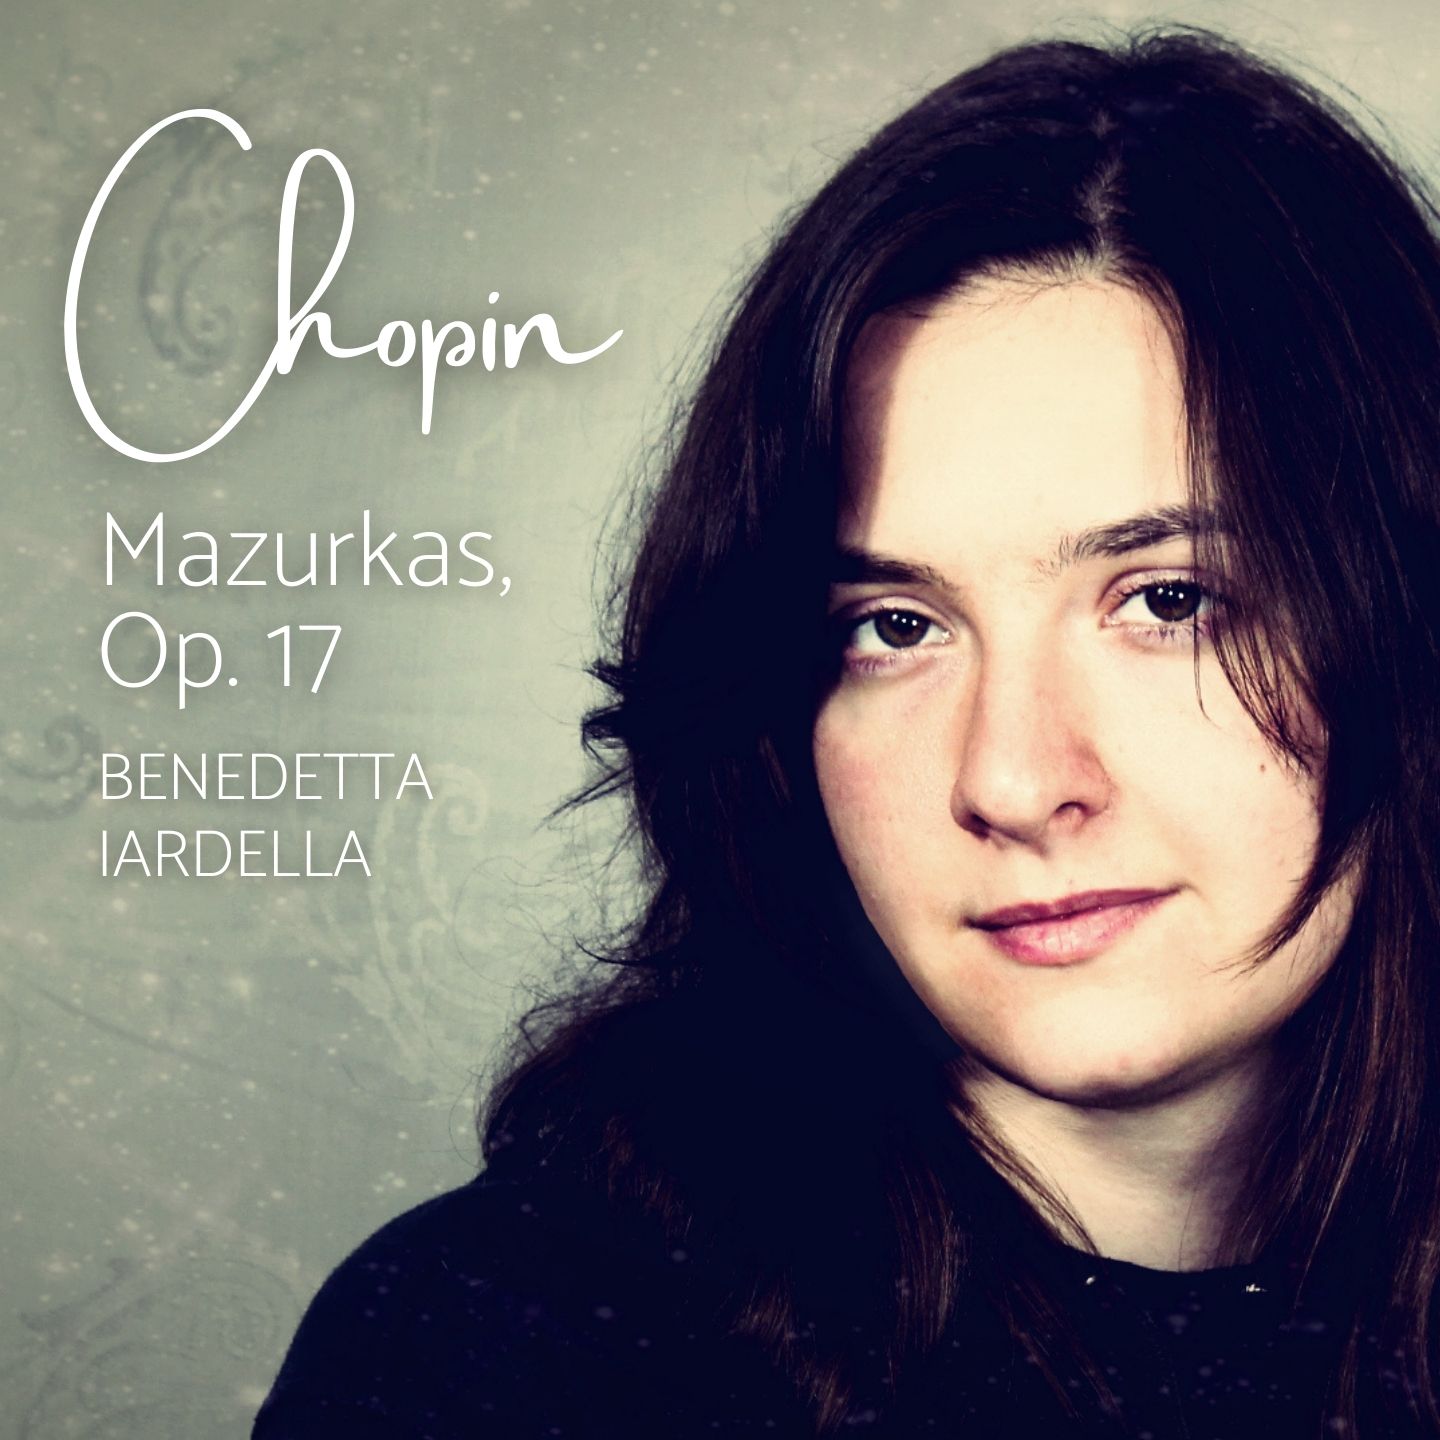  Chopin: Mazurkas, Op. 17